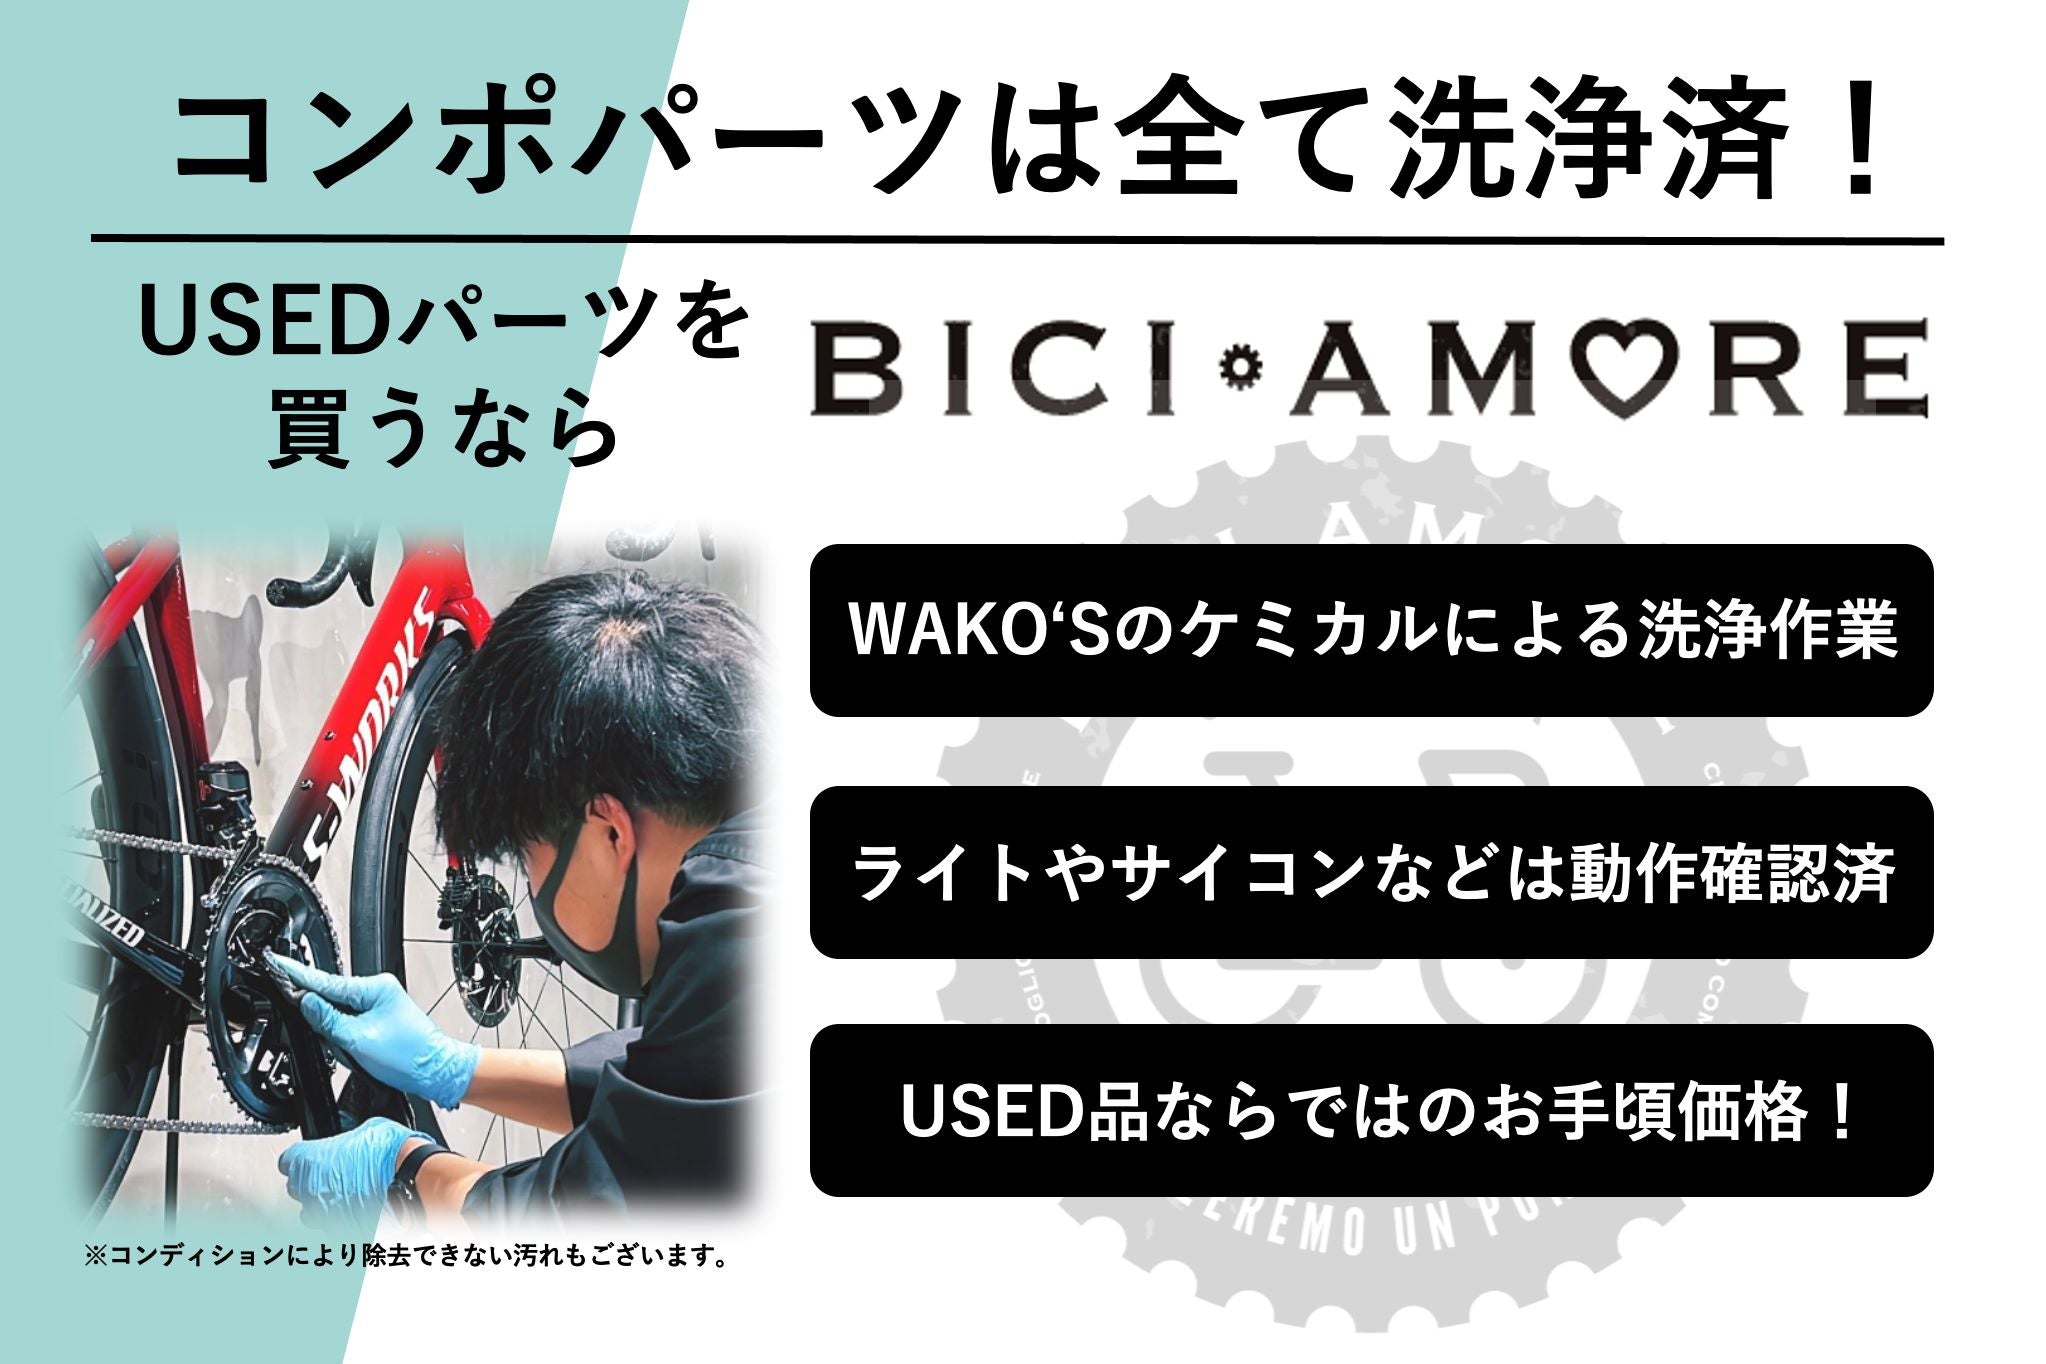 GU197 シマノ SHIMANO 105 FC-R7000 クランクセット 52-36T 170mm 11S 